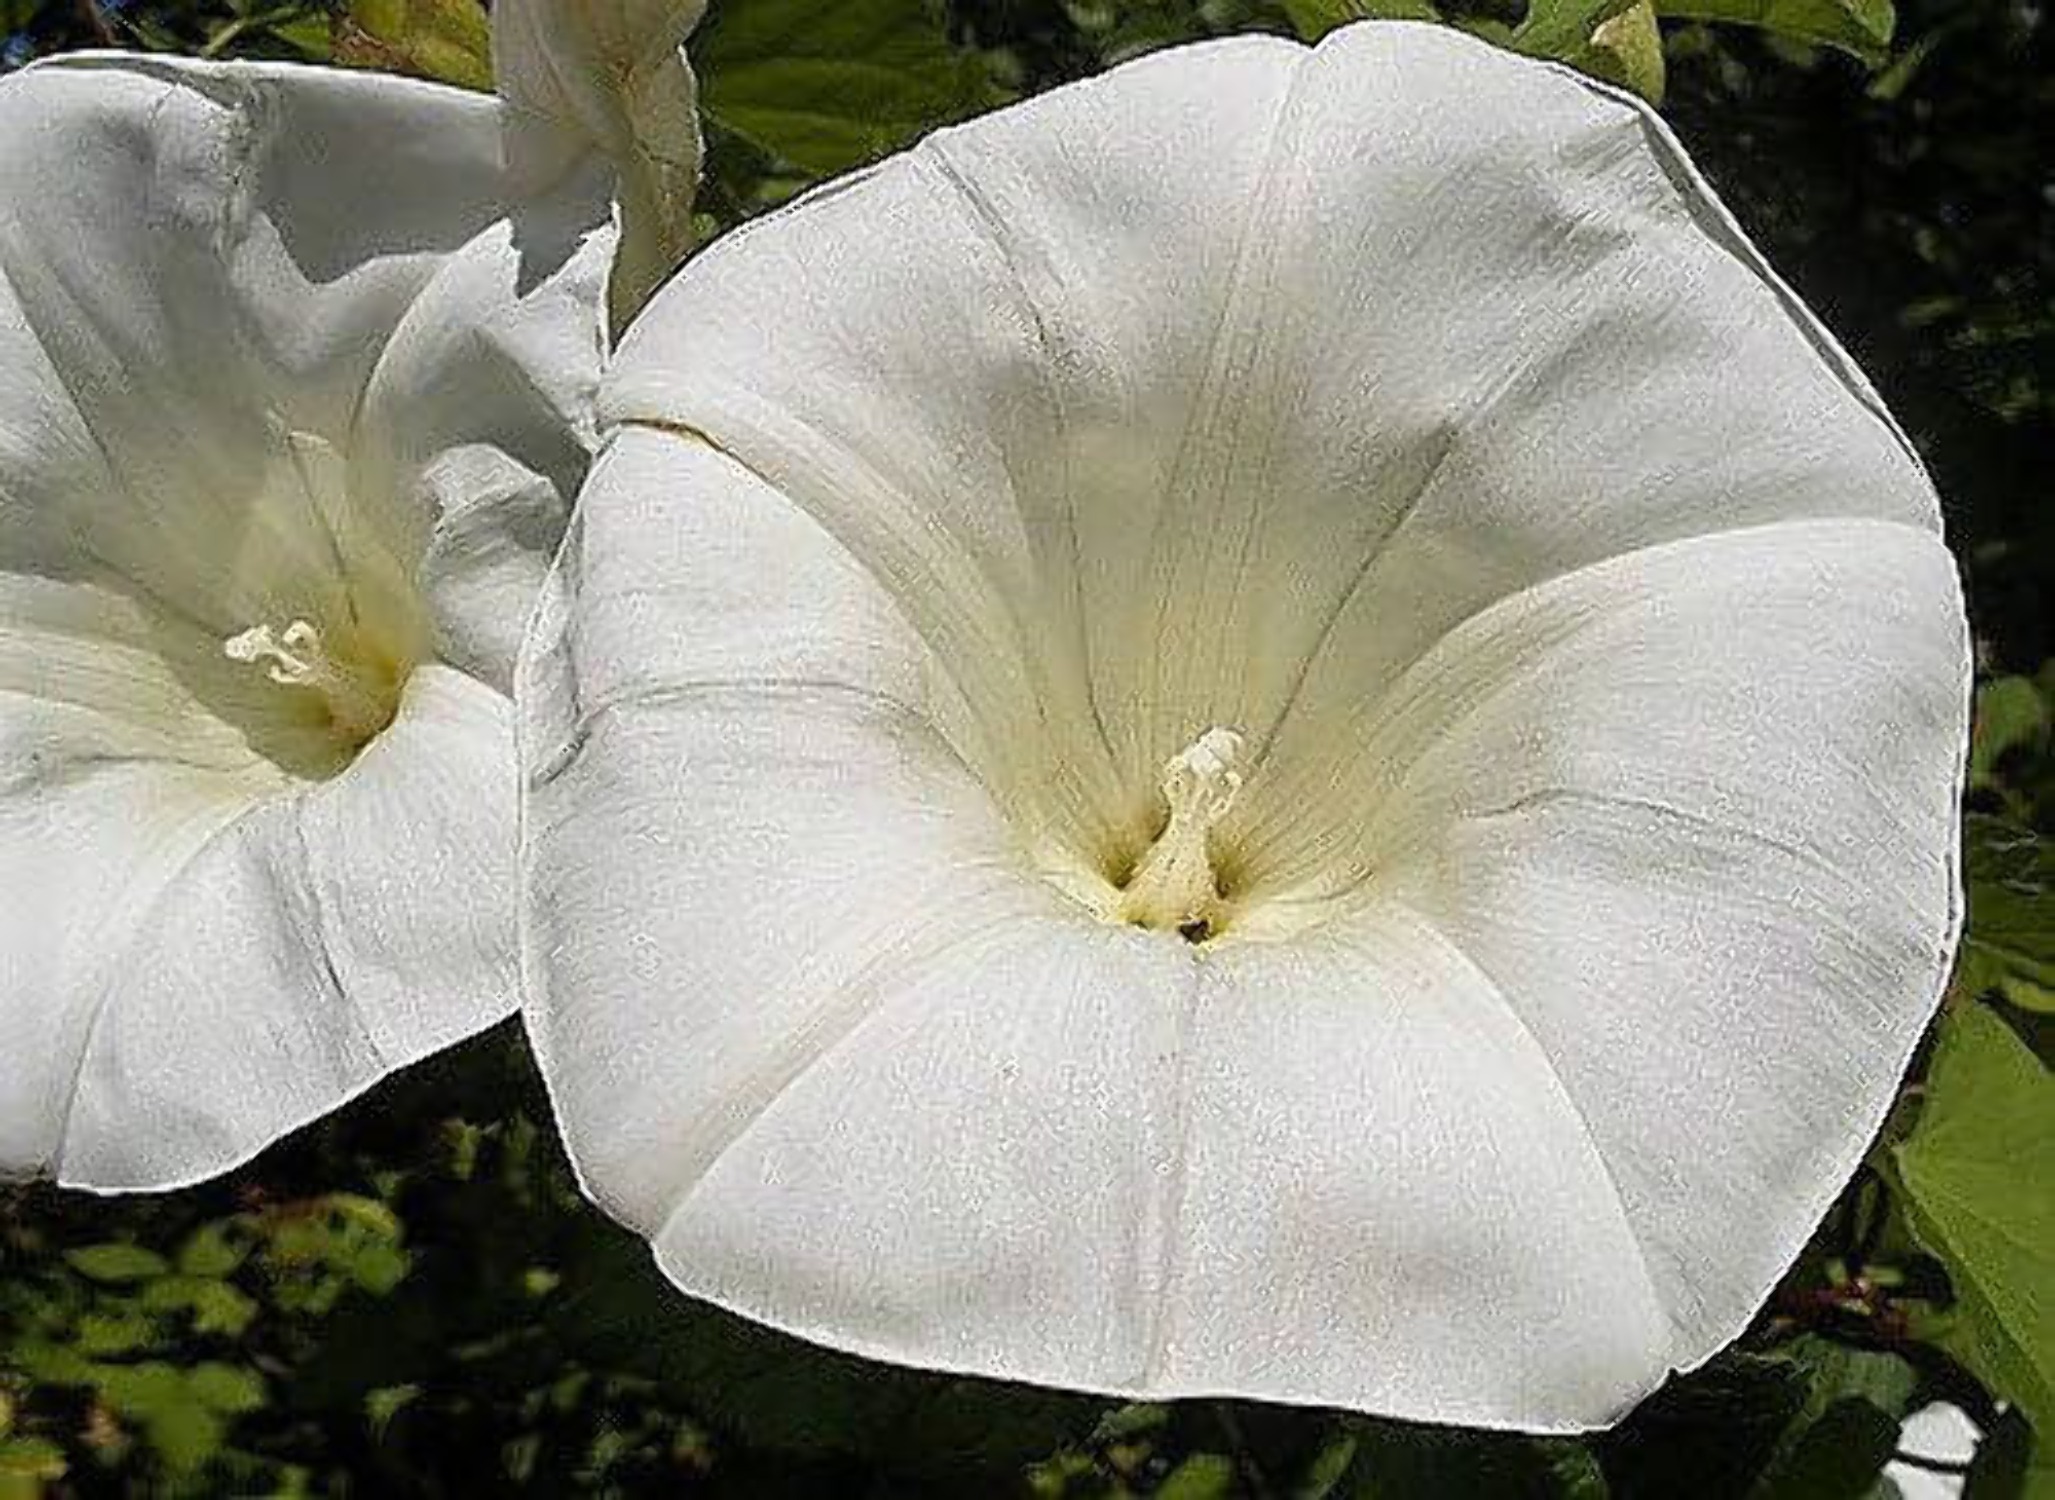 50 MOONFLOWER MORNING GLORY White Moon Flower Ipomoea Alba Flower Vine Seeds - image 2 of 10